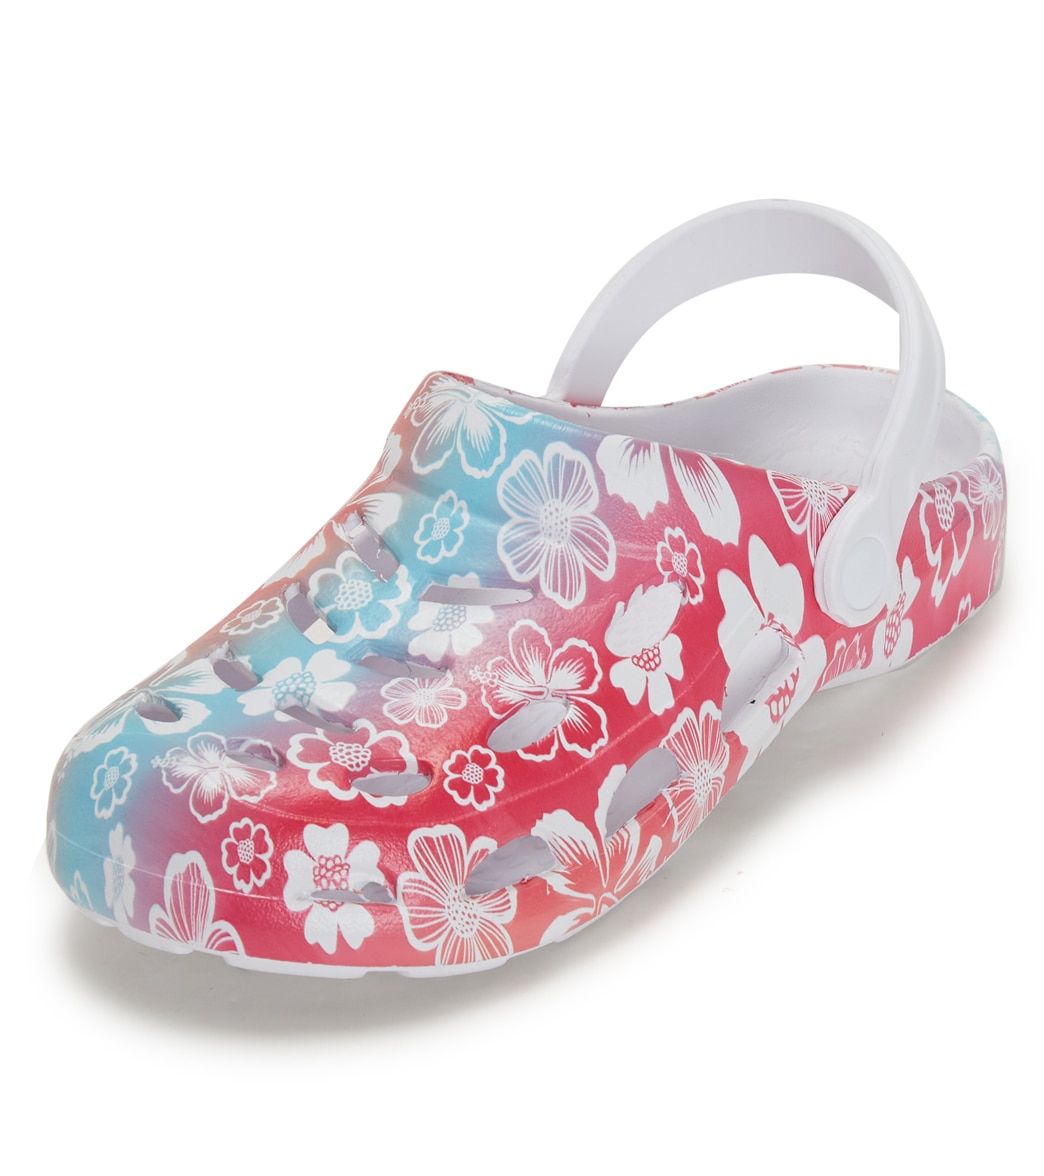 Northside Kid's Haven Slip On Shoes Shoes Waterproof Shoes Toddler/Little/Big Kid - Fuchsia/Aqua 10 - Swimoutlet.com